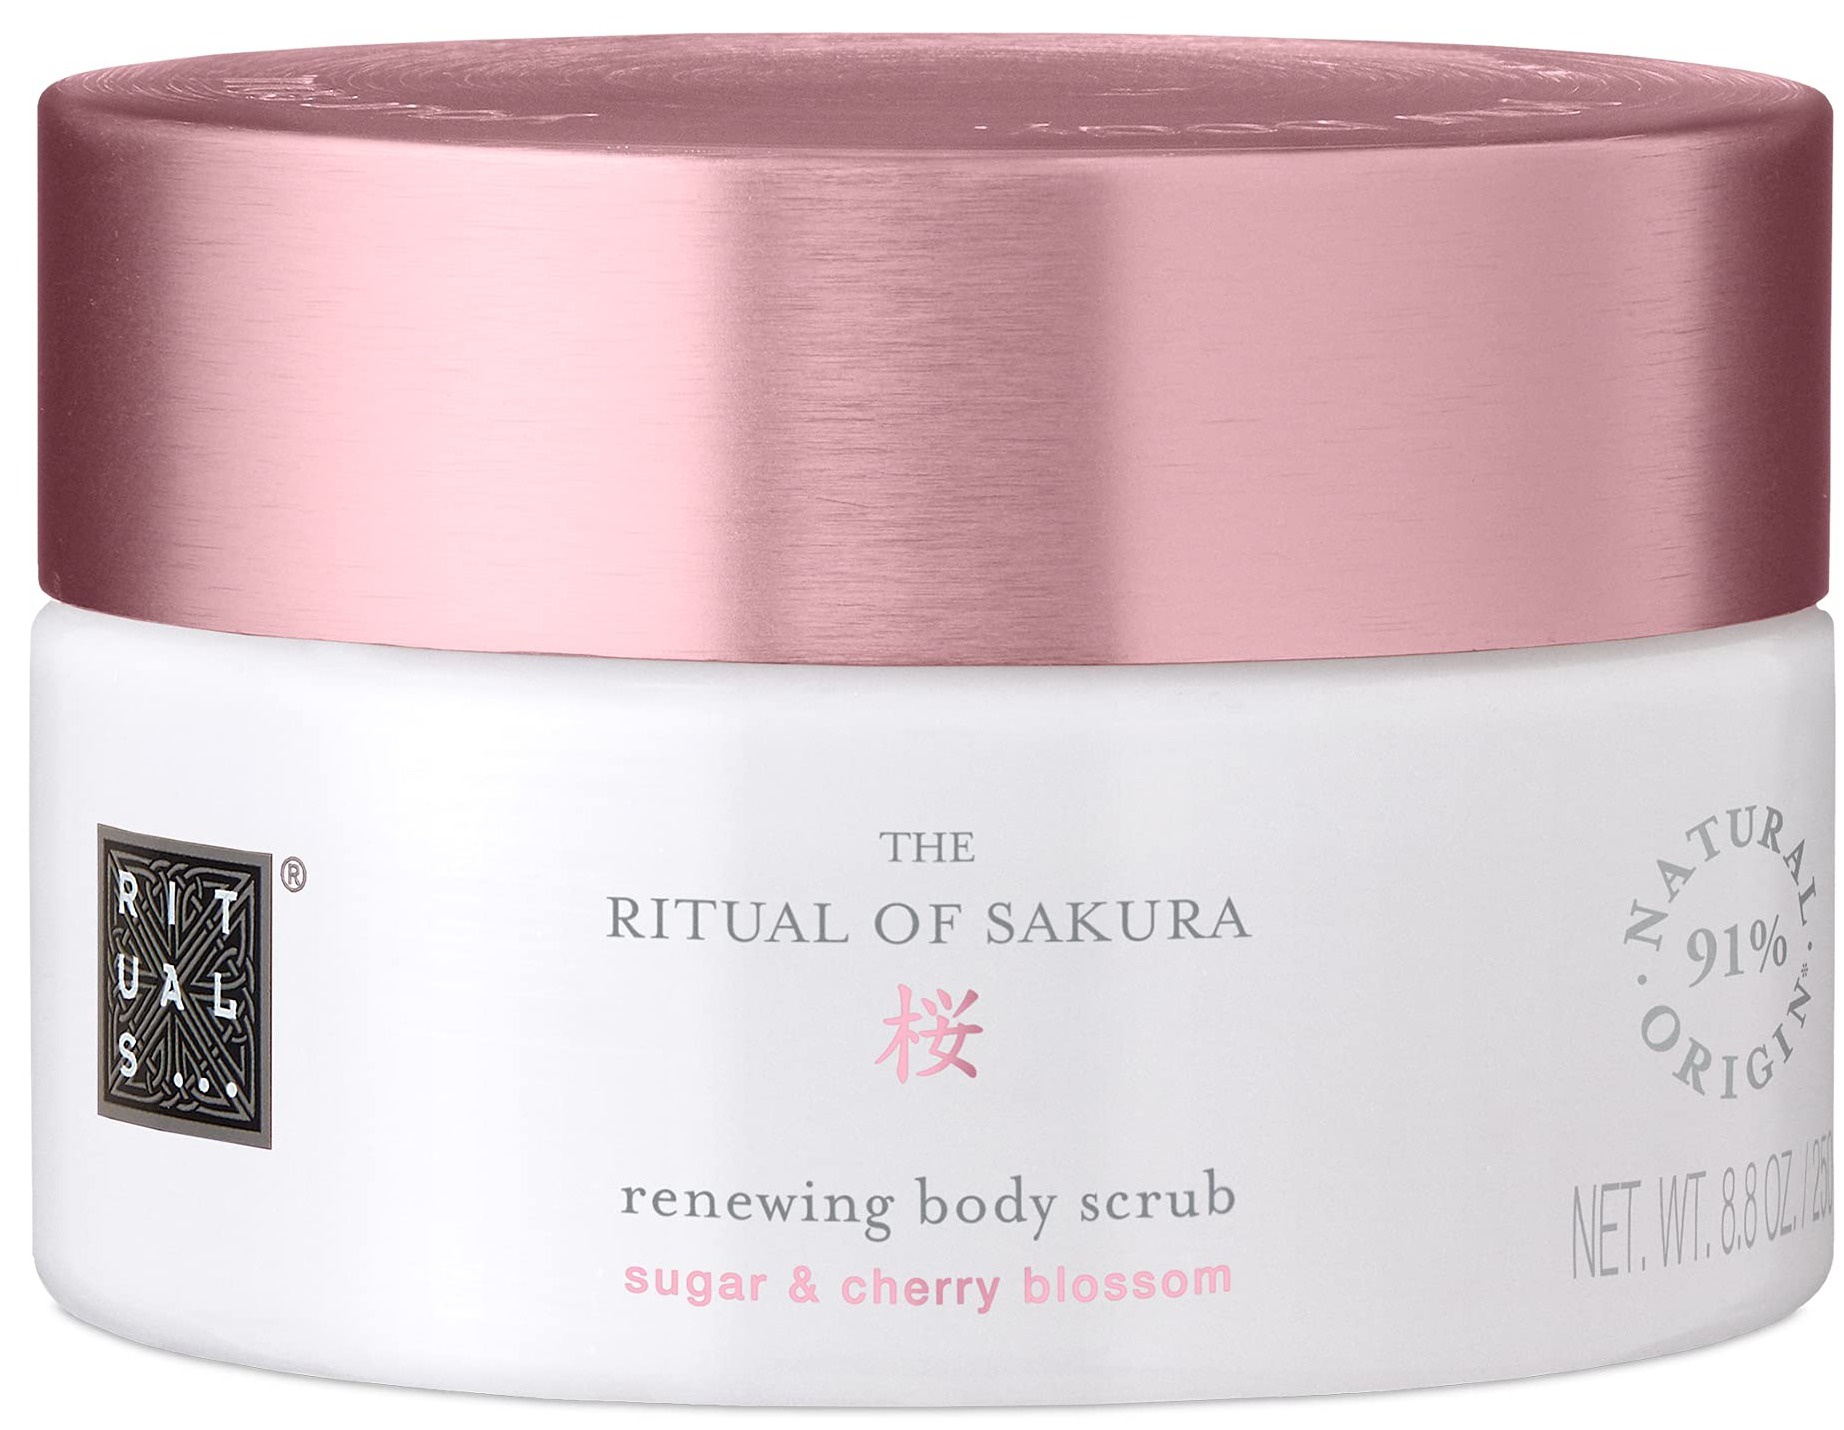 RITUALS Sakura Renewing Body Scrub - Exfoliating Scrub With Sugar & Cherry Blossom -